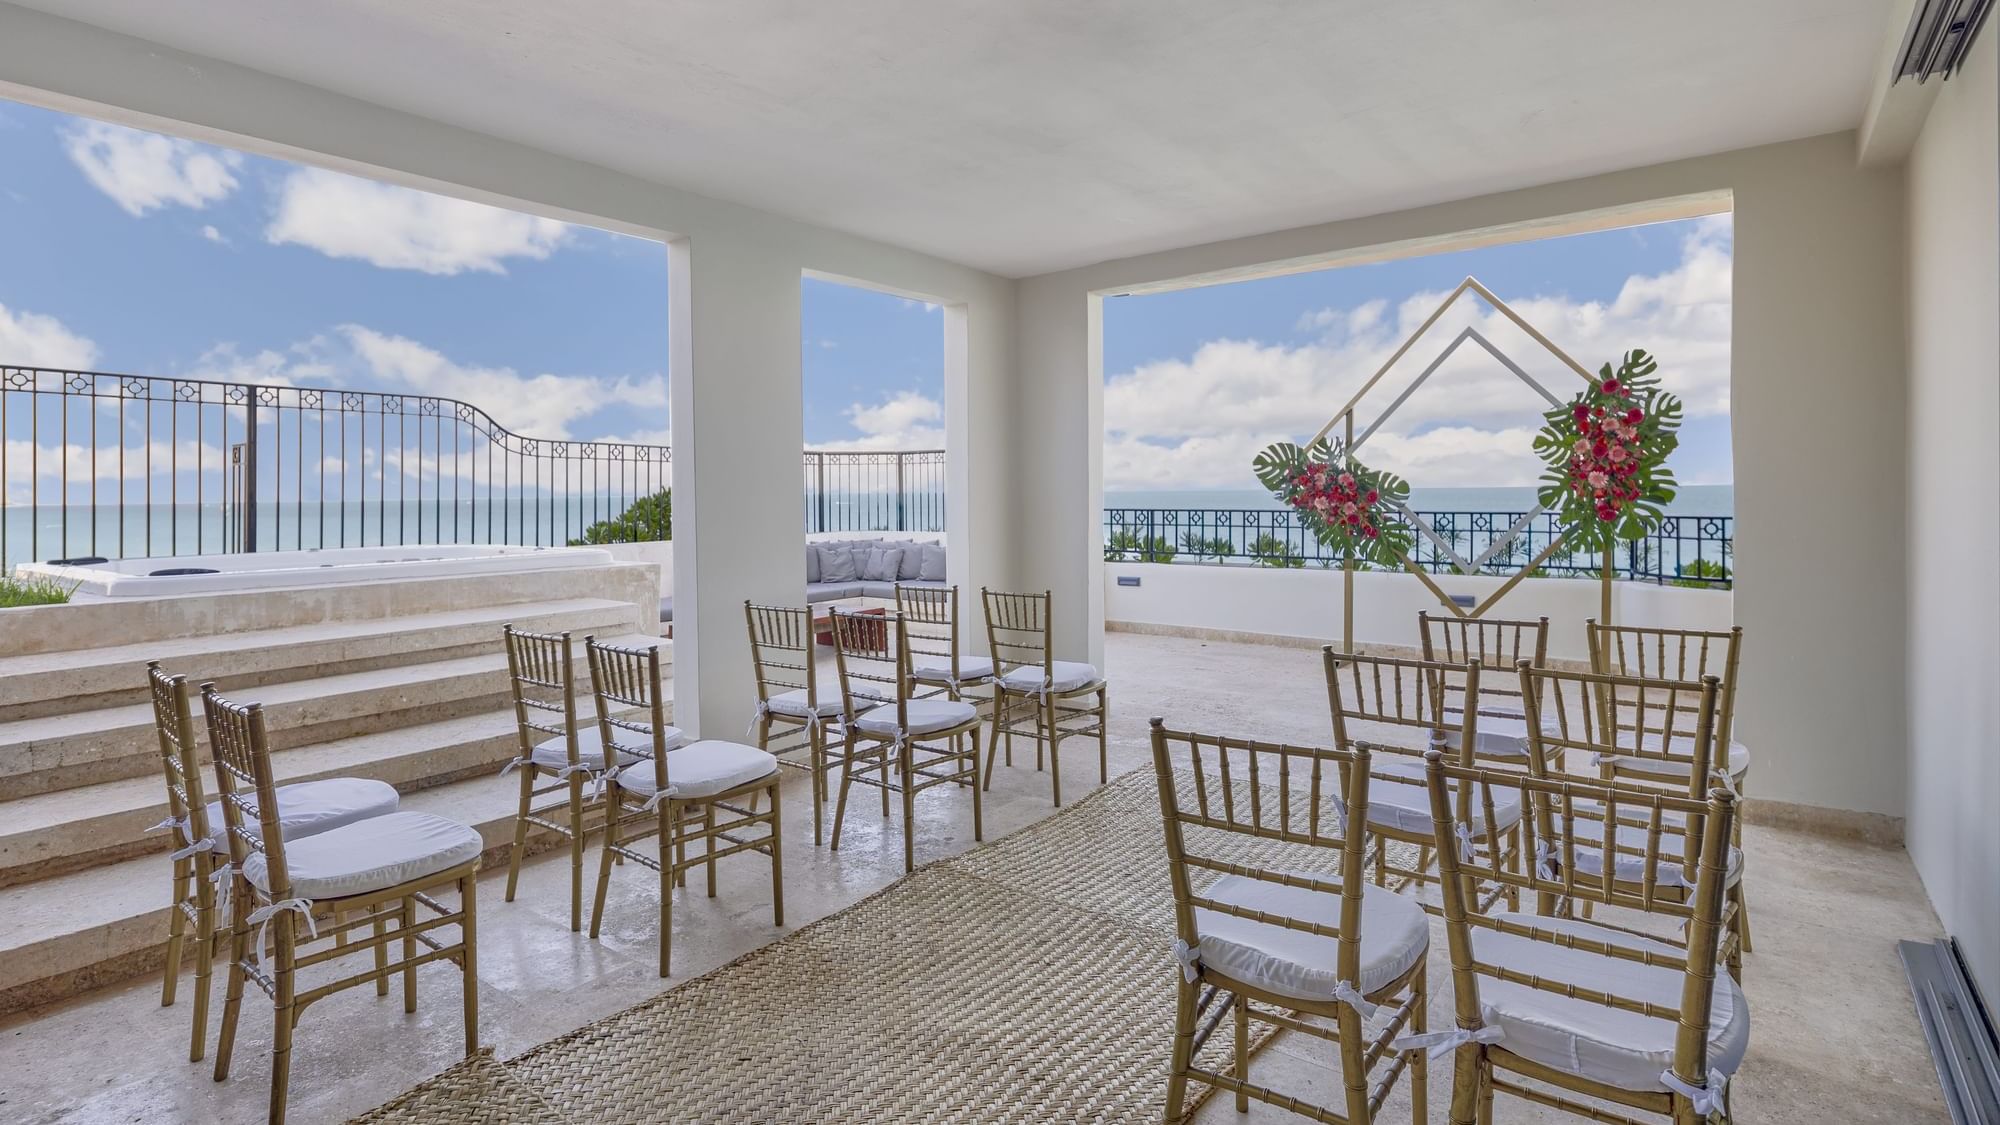 Chairs arranged for wedding, Fiesta Americana Hotels